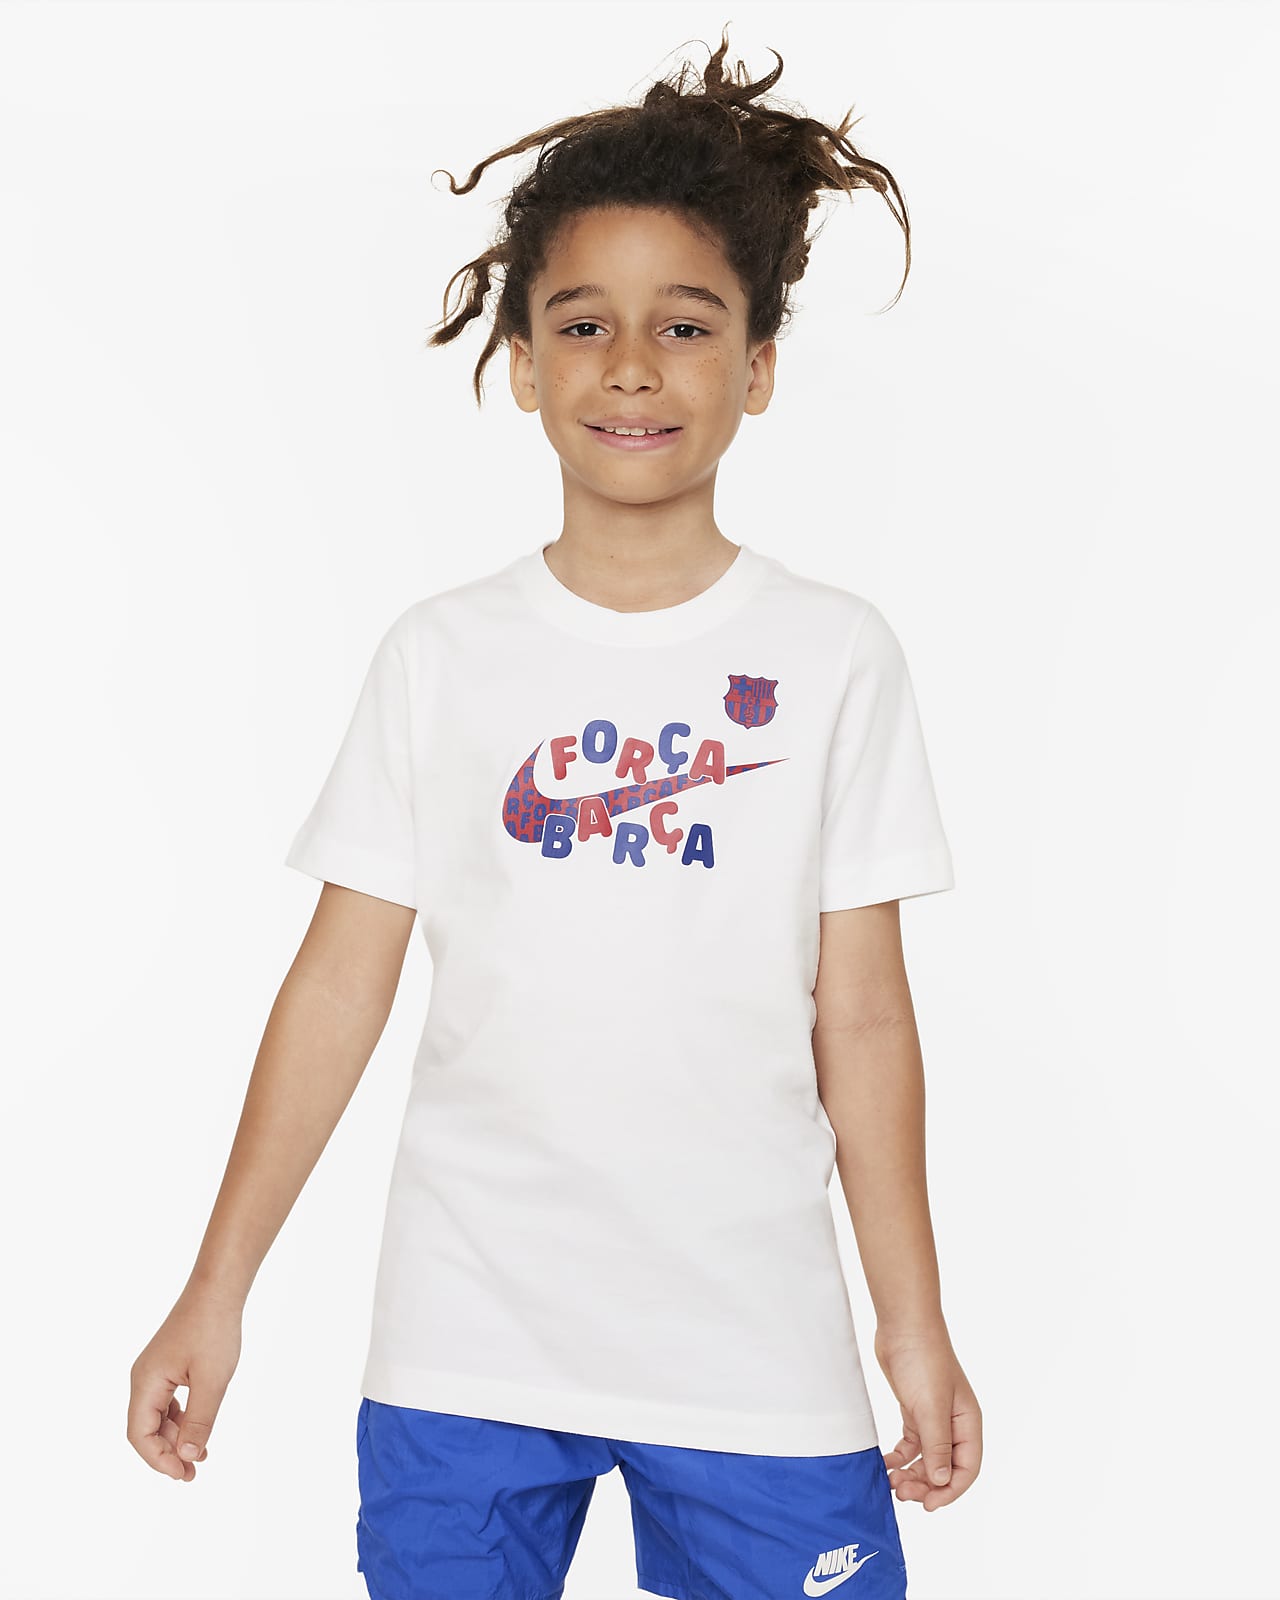 Playera de fútbol Nike para niños talla grande FC Barcelona Mascot